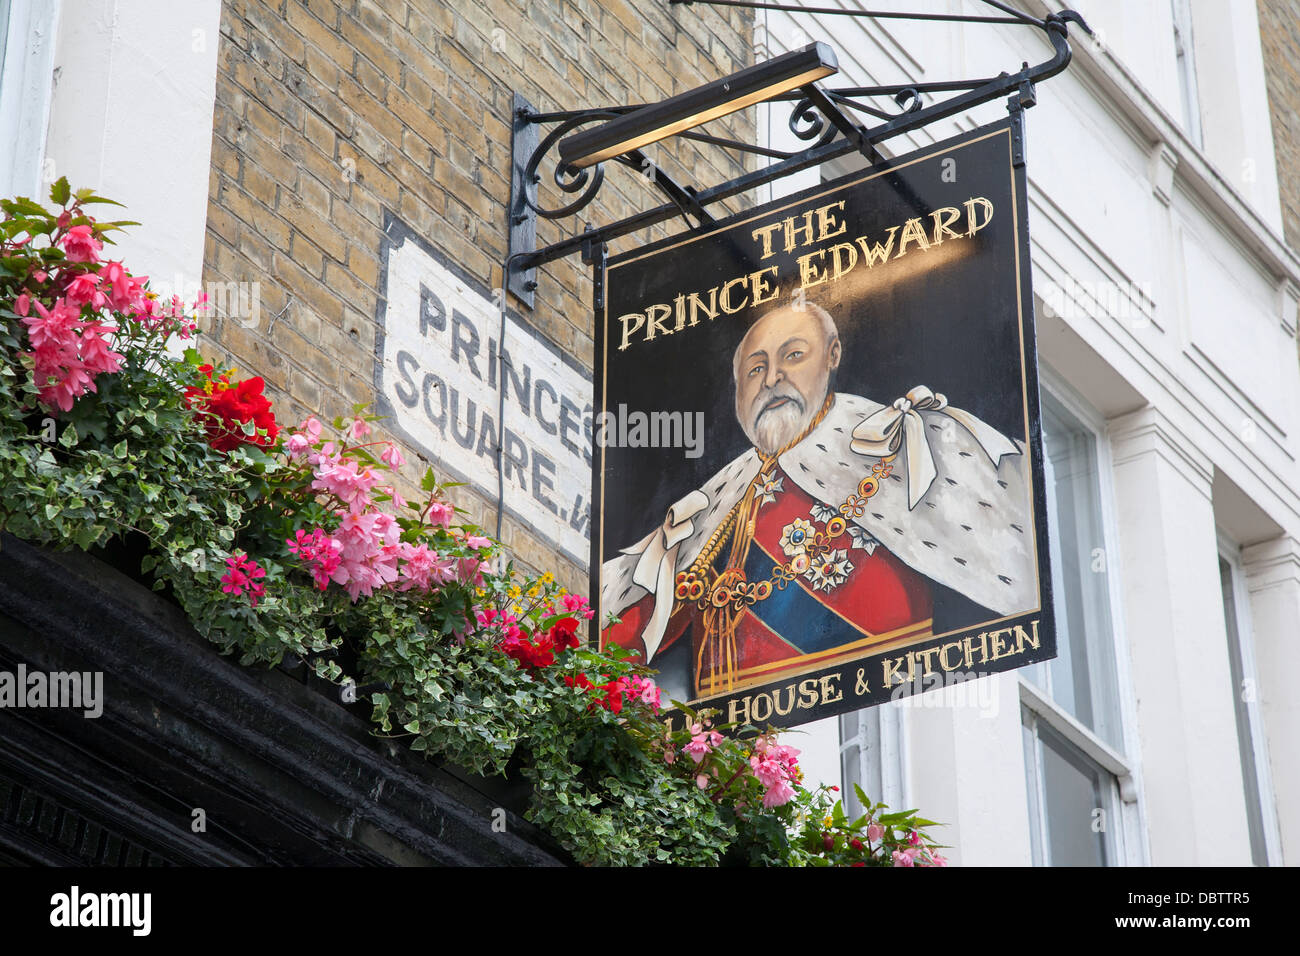 Prince Edward Pub Sign, Princes Square, London, England, UK Stock Photo